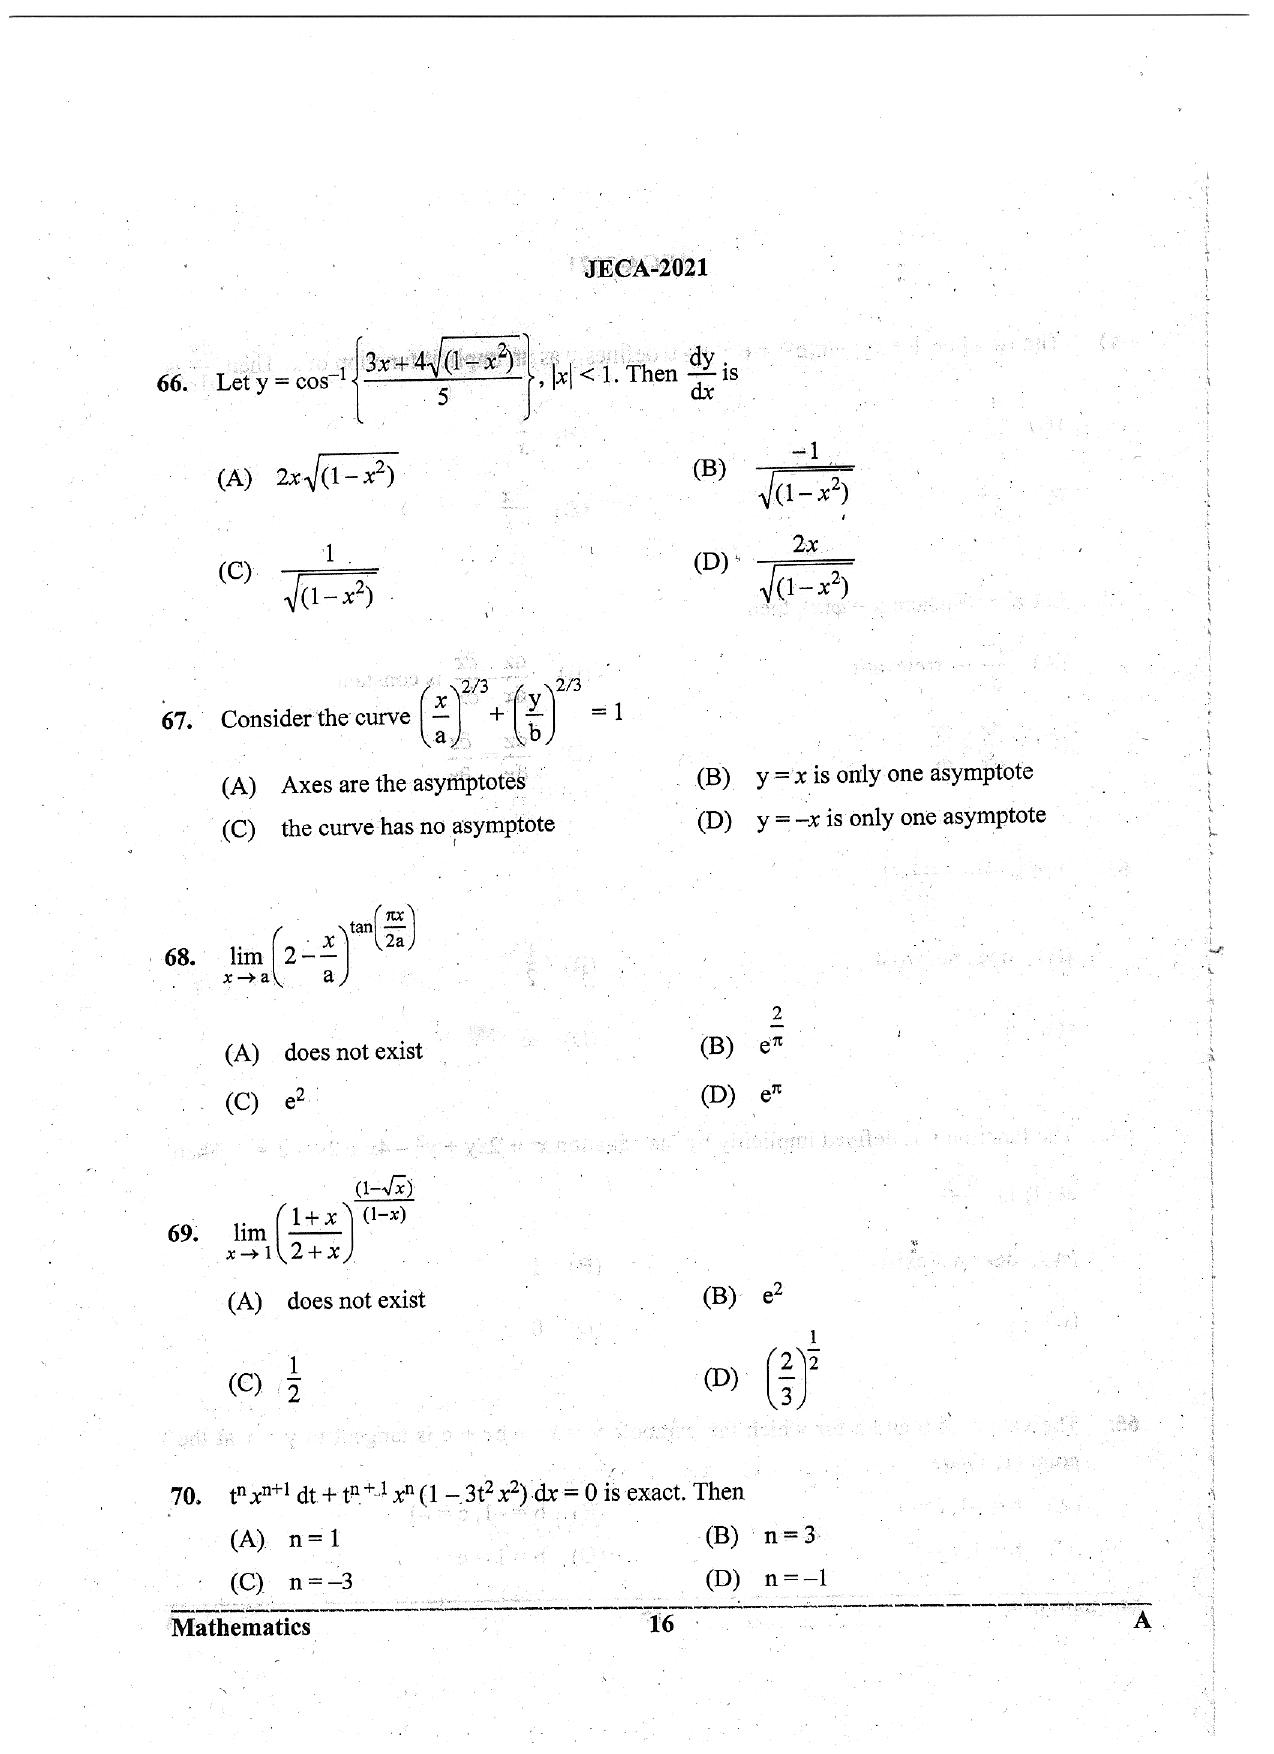 WB JECA 2021 Mathematics Question Paper - Page 16